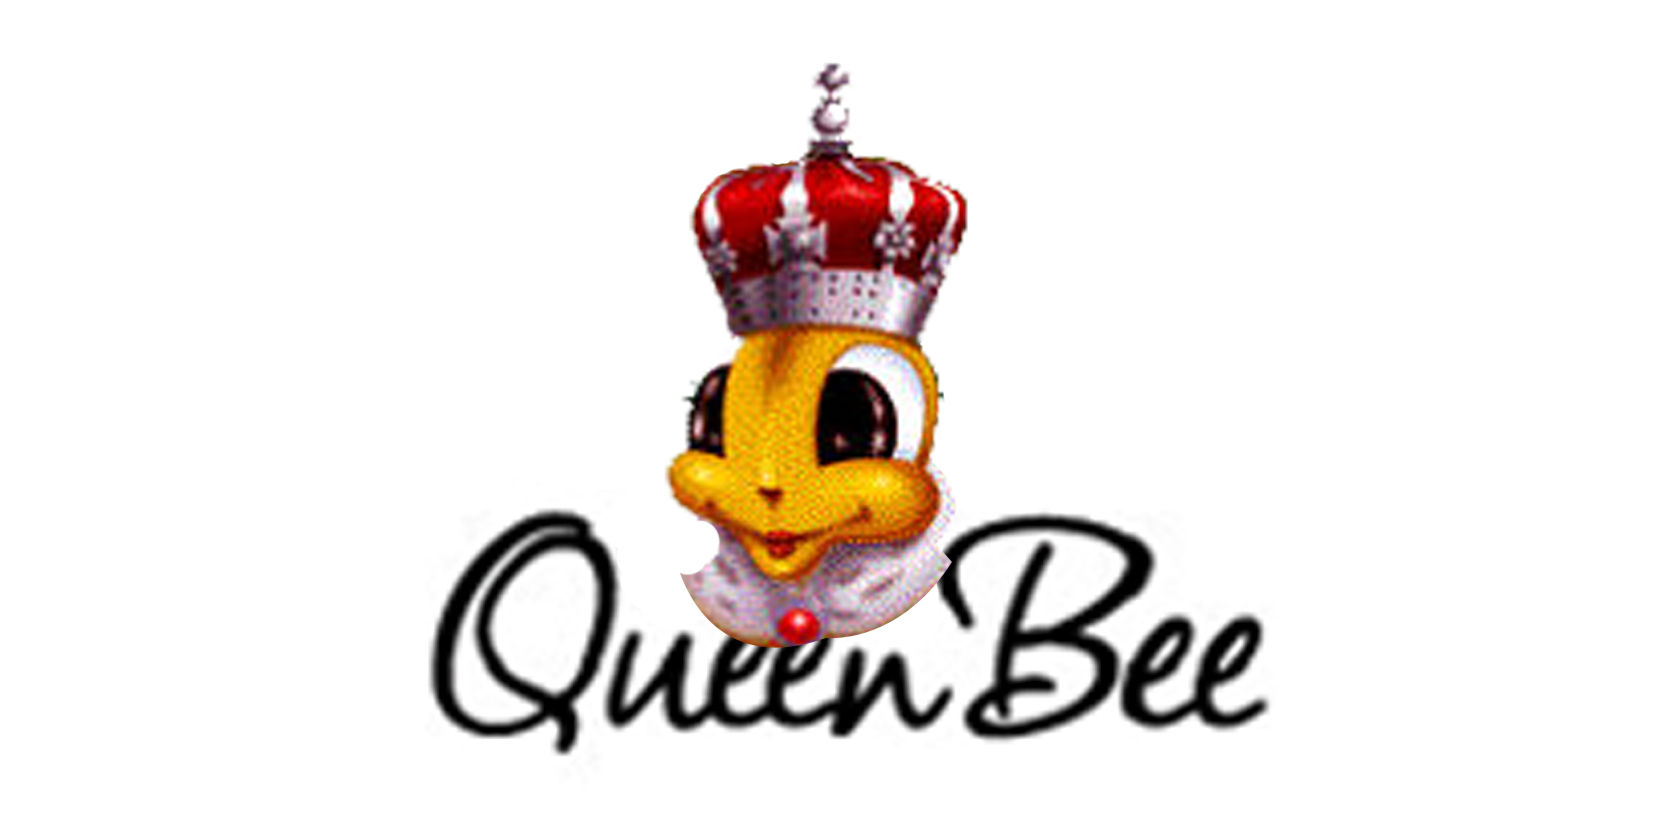 queen bee clipart images - photo #23